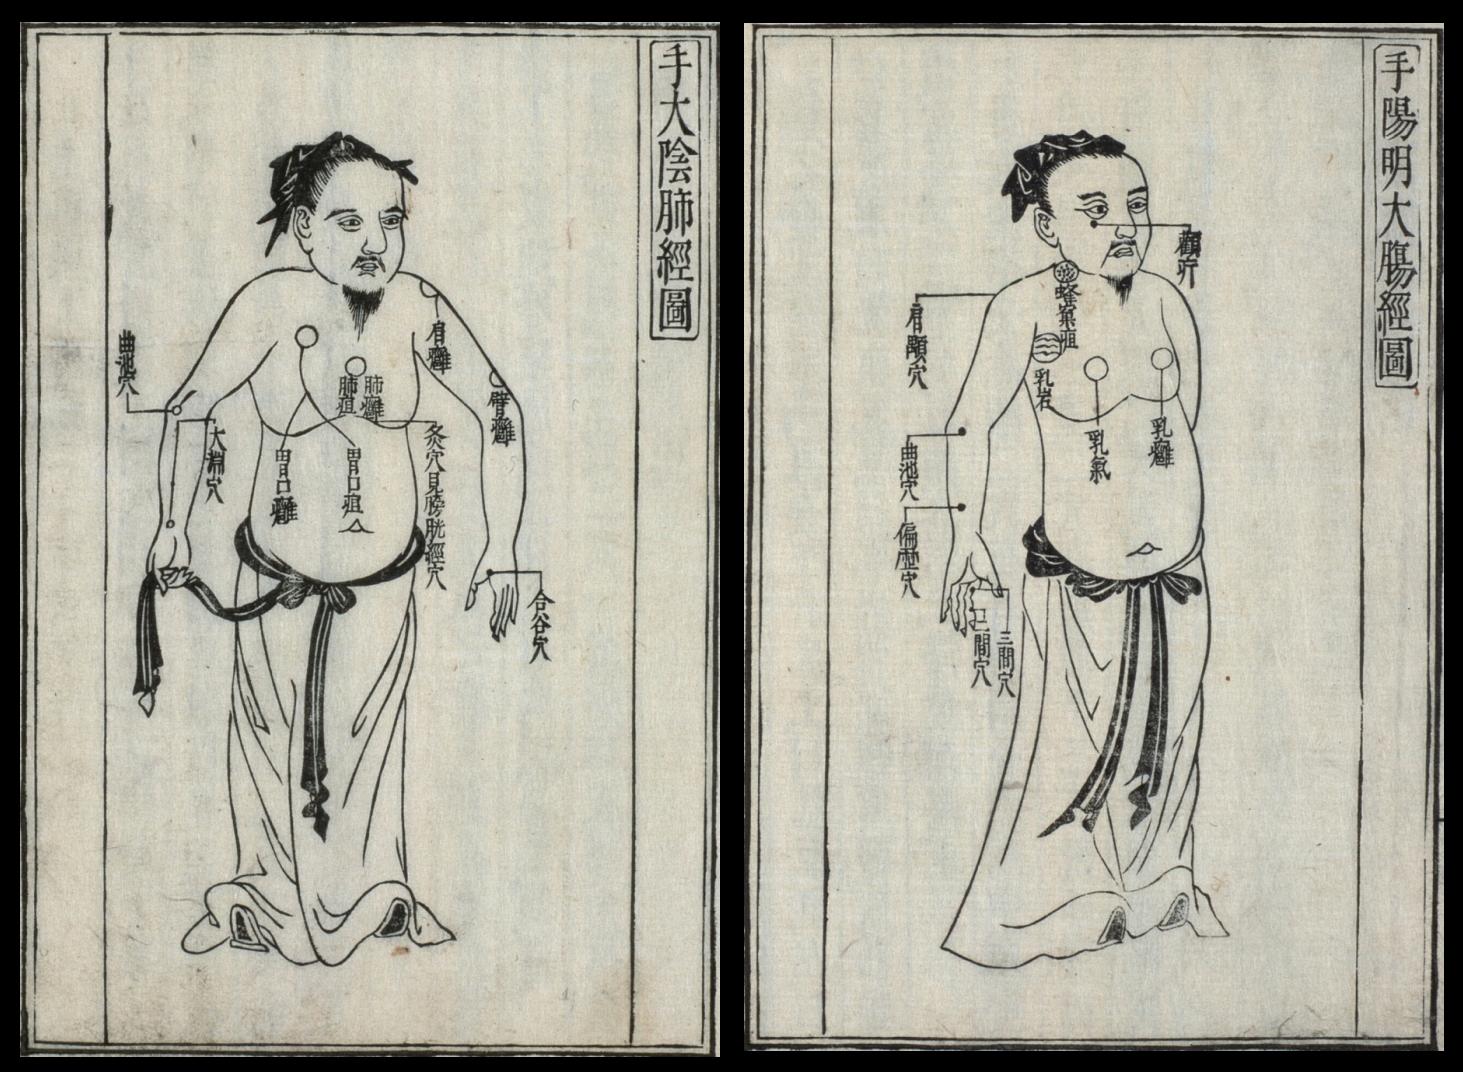 historic Japanese medicine - 2 frontal body views